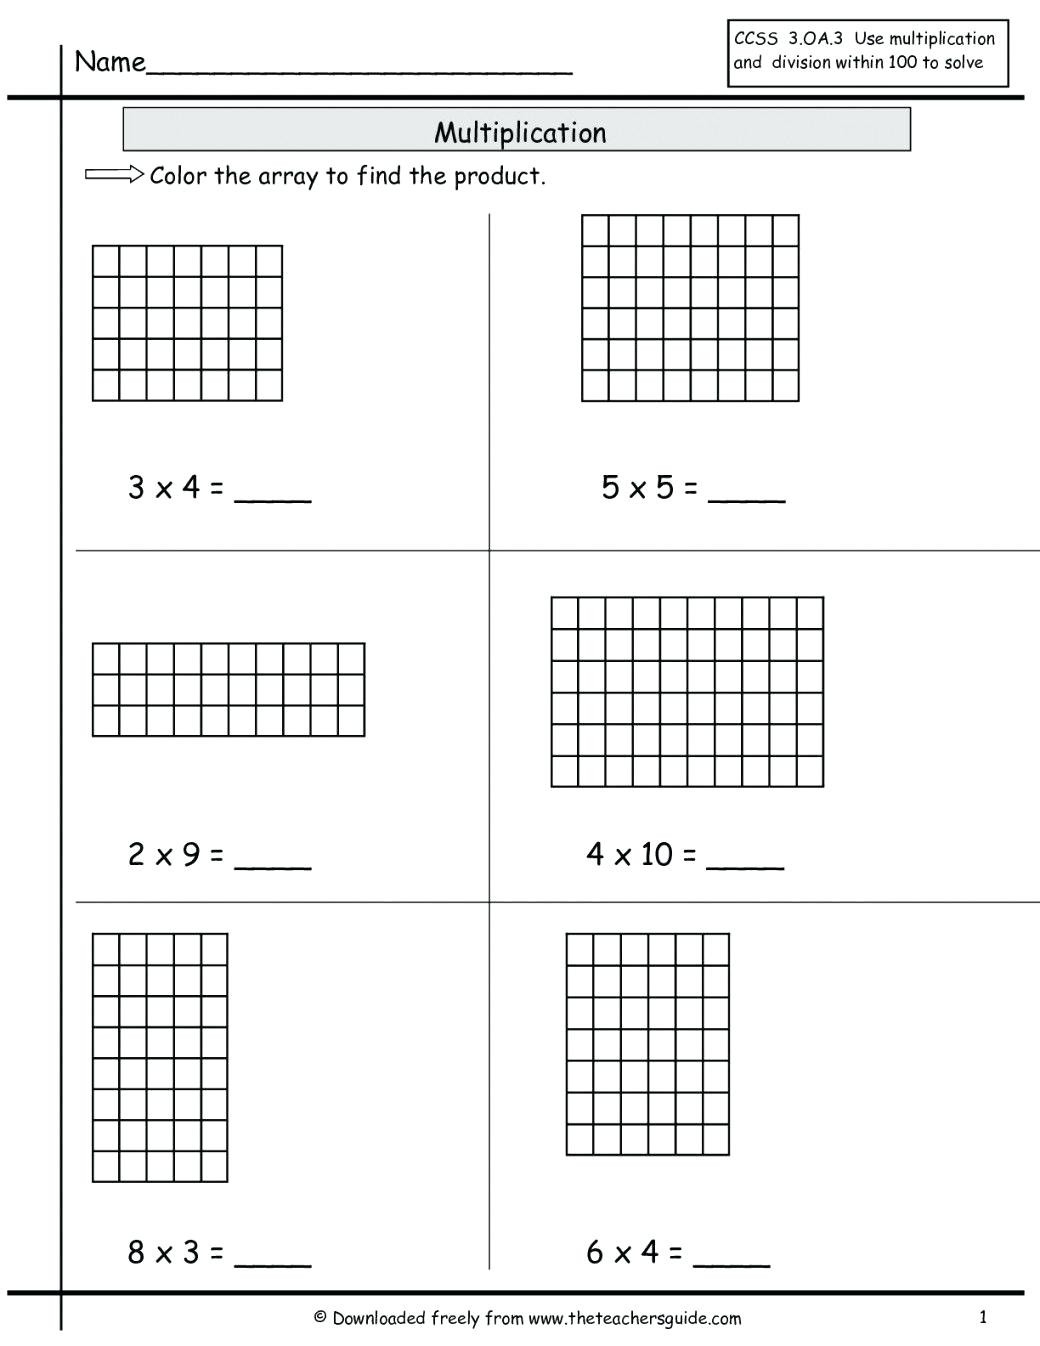 box-method-multiplication-math-multiplication-box-grid-help-db-excel